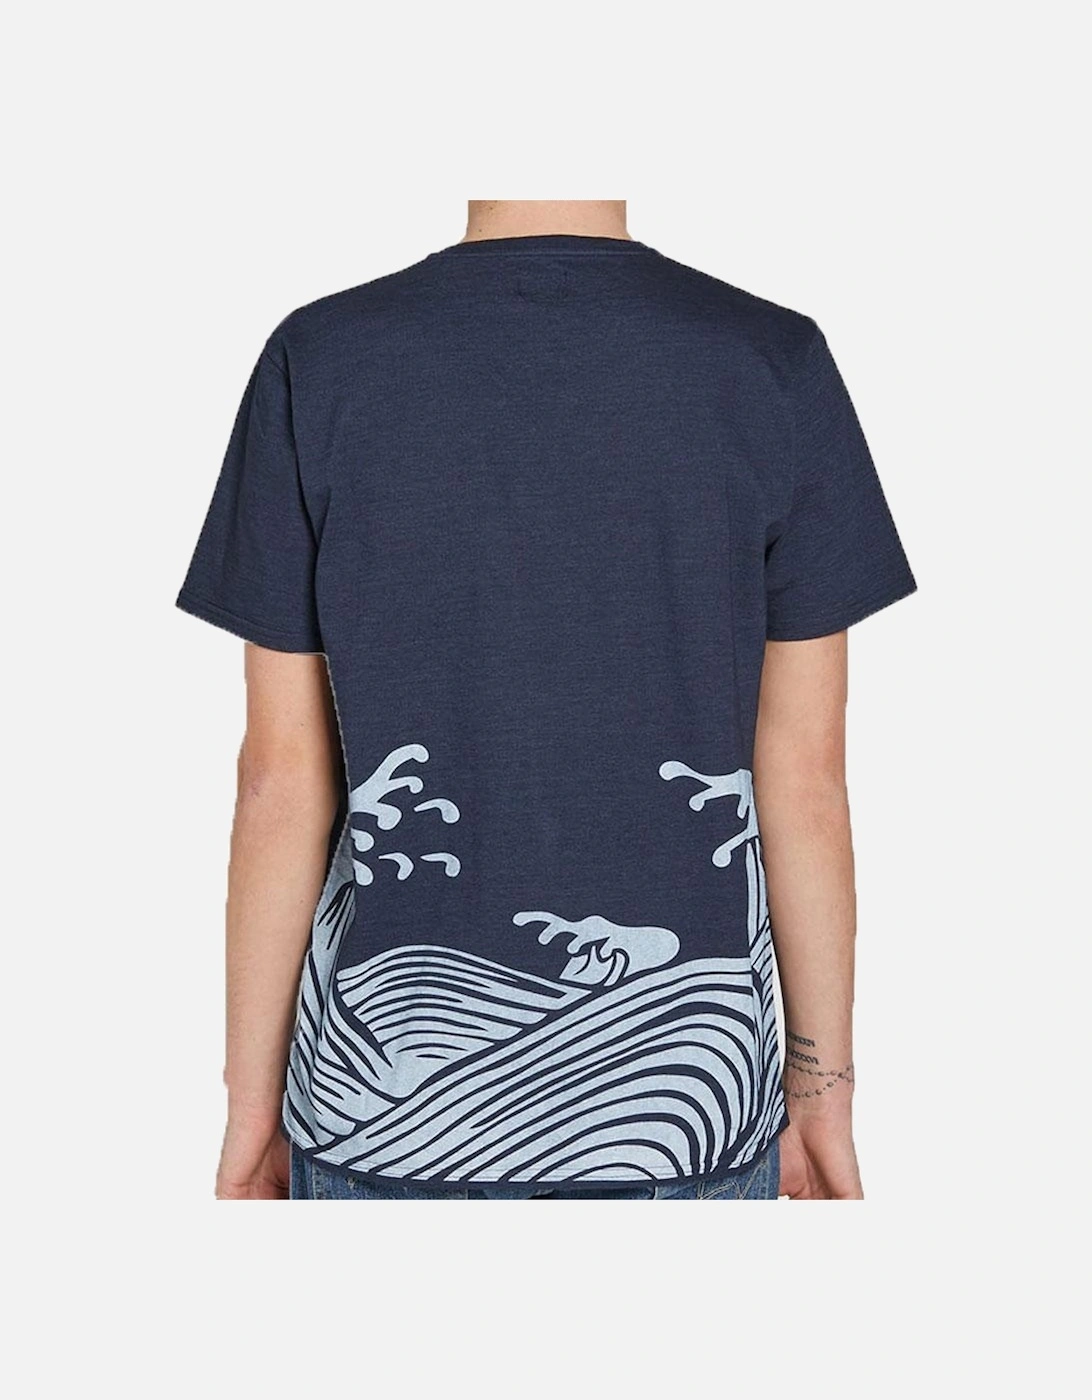 Waves T-Shirt - Indigo